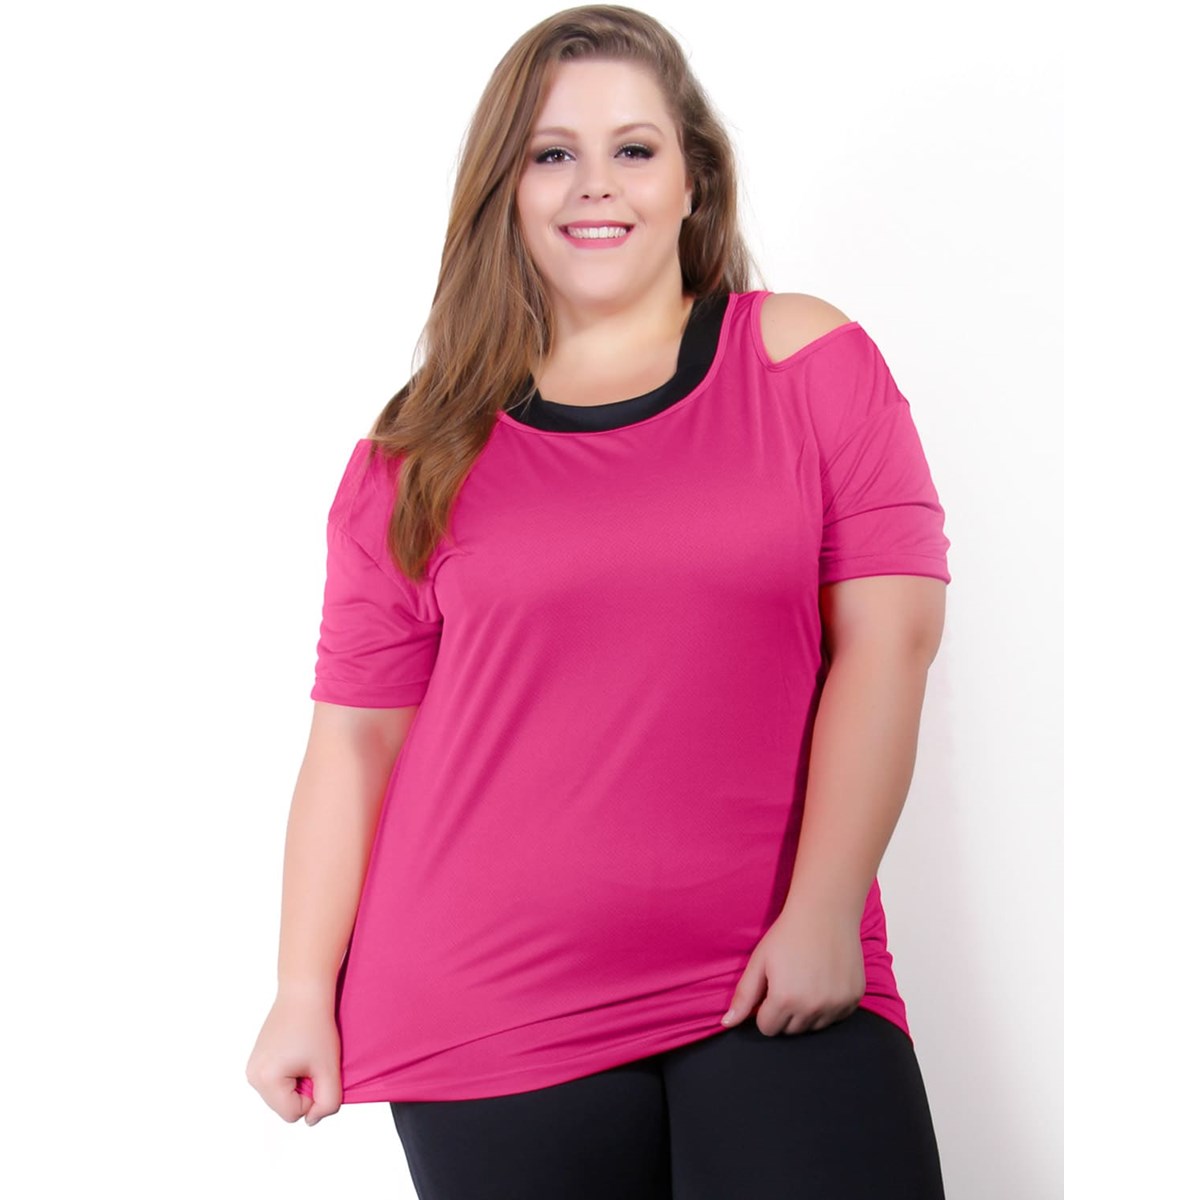 Blusa Fitness Plus Size em Dry Fit Pink | Ref: 4.4.1751-07